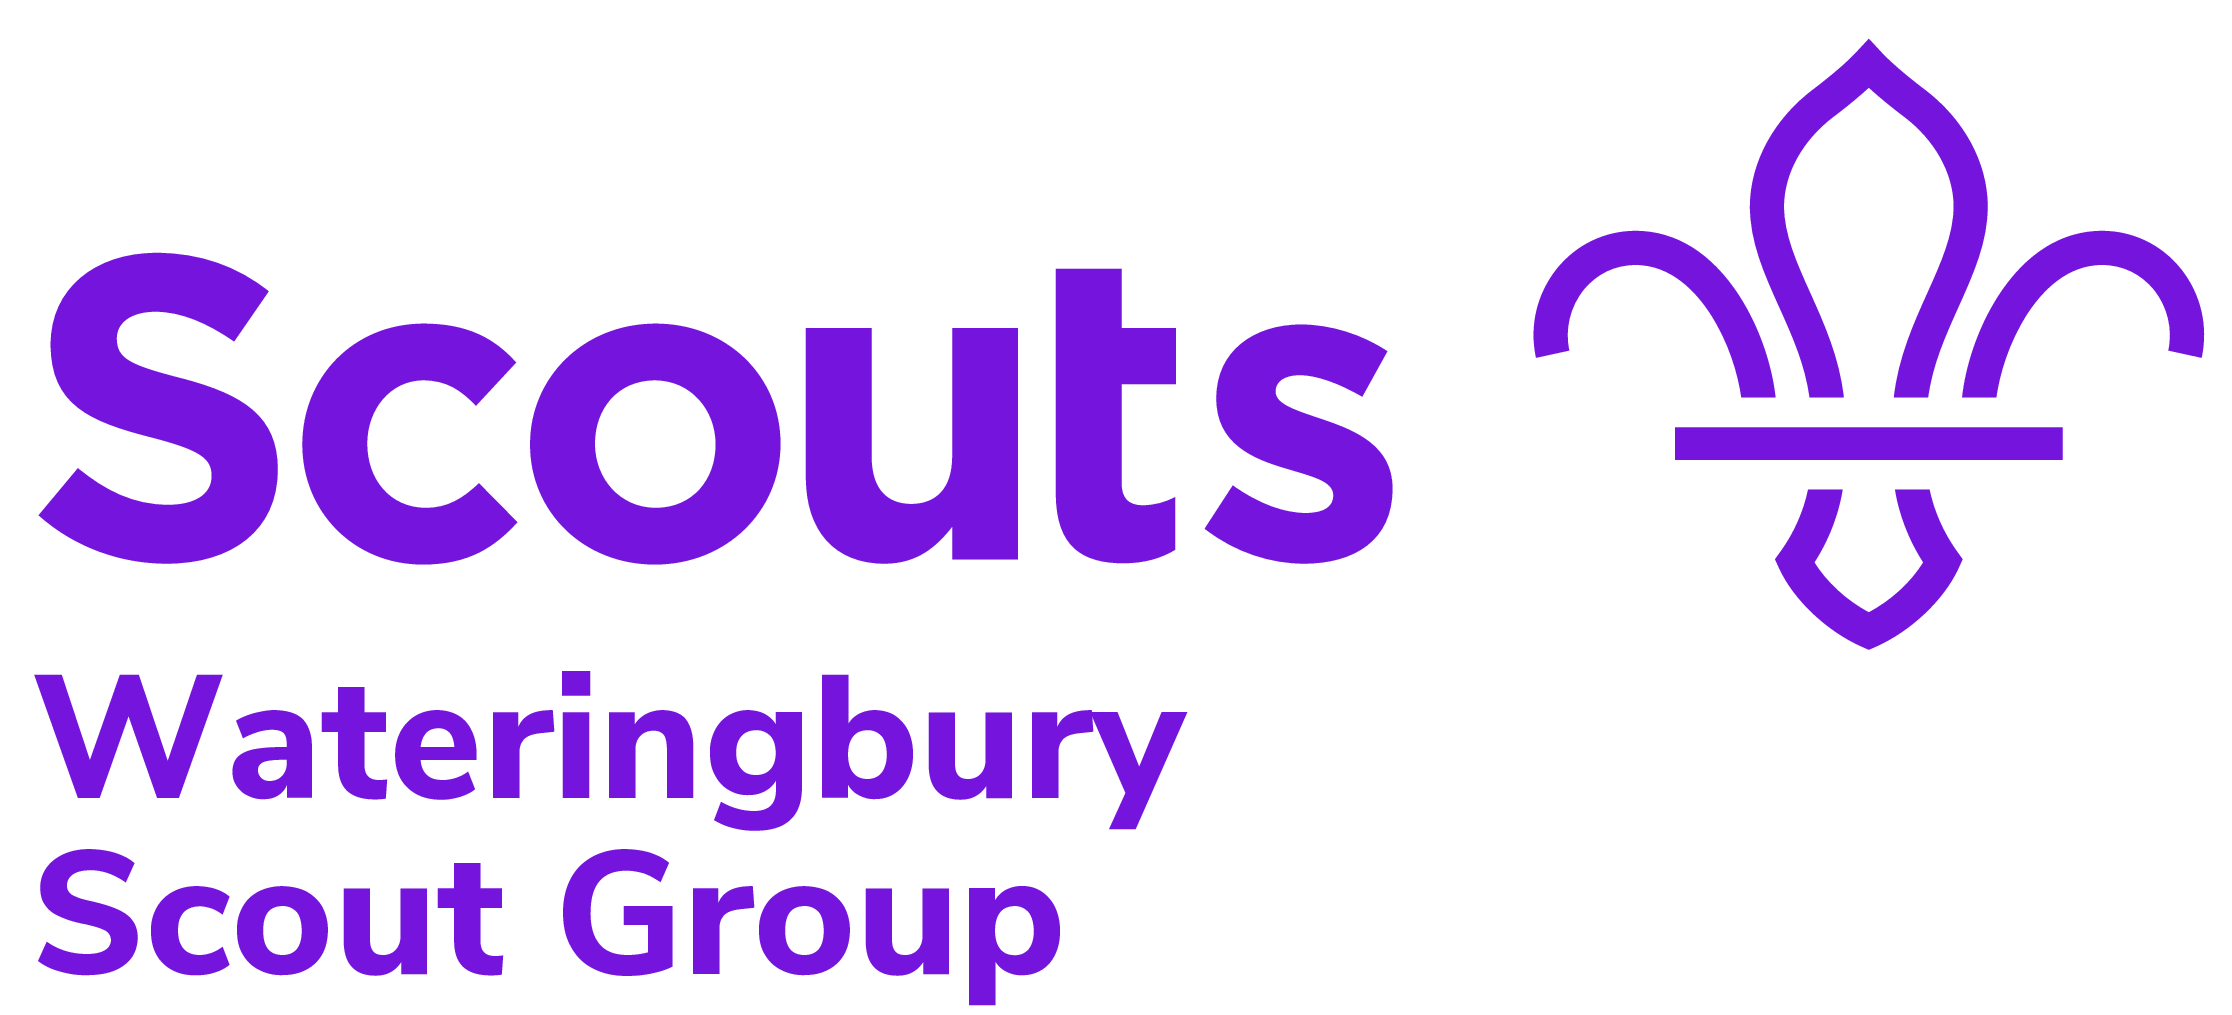 Wateringbury Scout Group